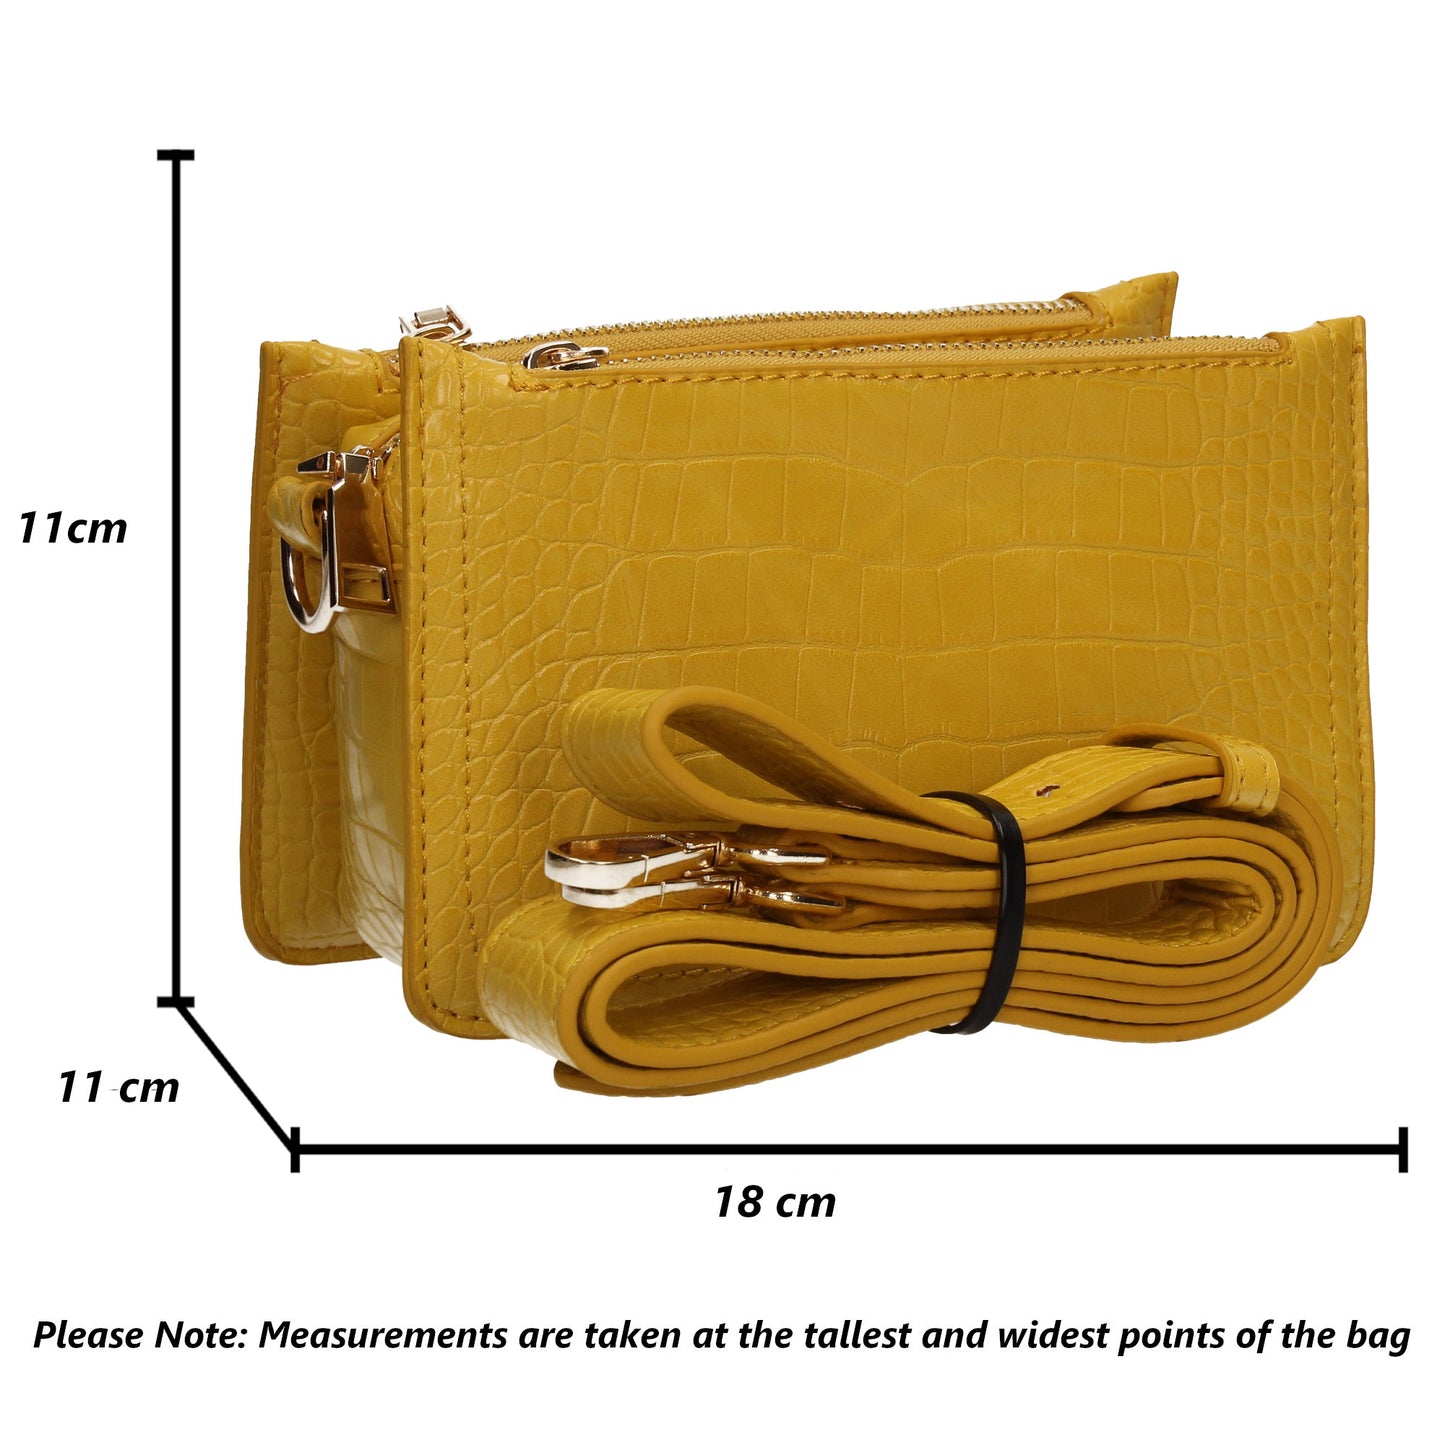 Evalyn Croc Structured Crossbody Clutch Bag Lemon Yellow